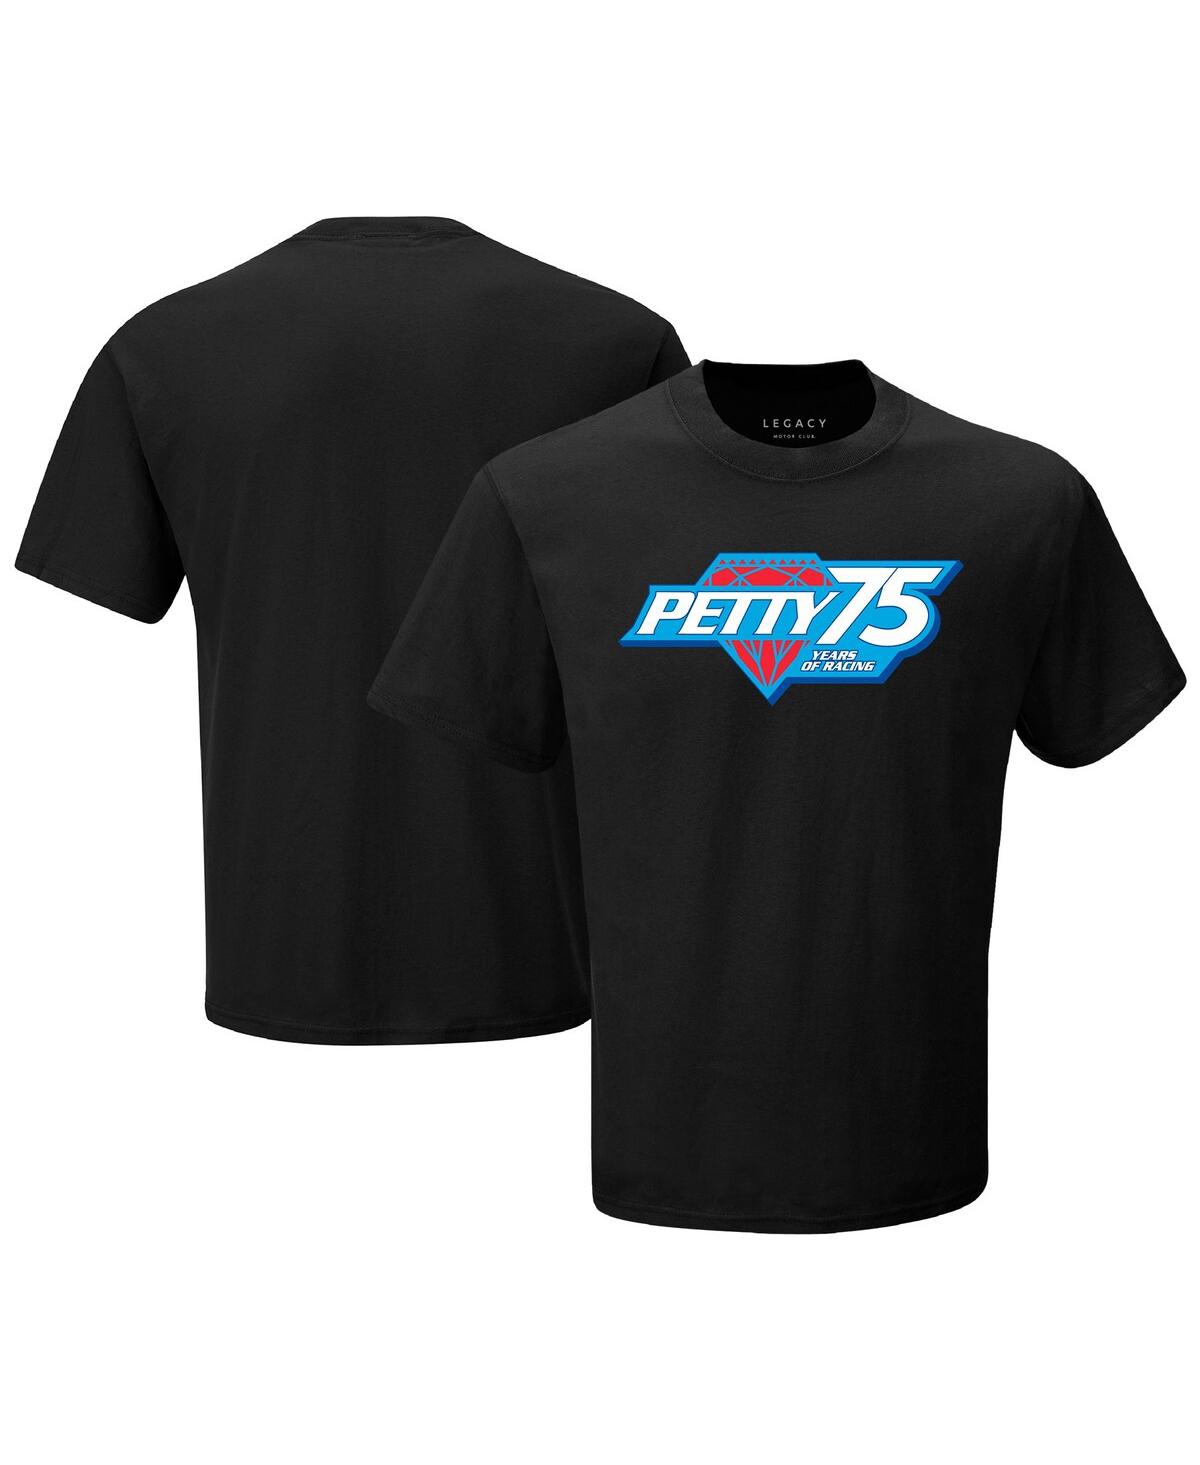 Men's Legacy Motor Club Team Collection Black Richard Petty 75th Anniversary Logo T-shirt - Black